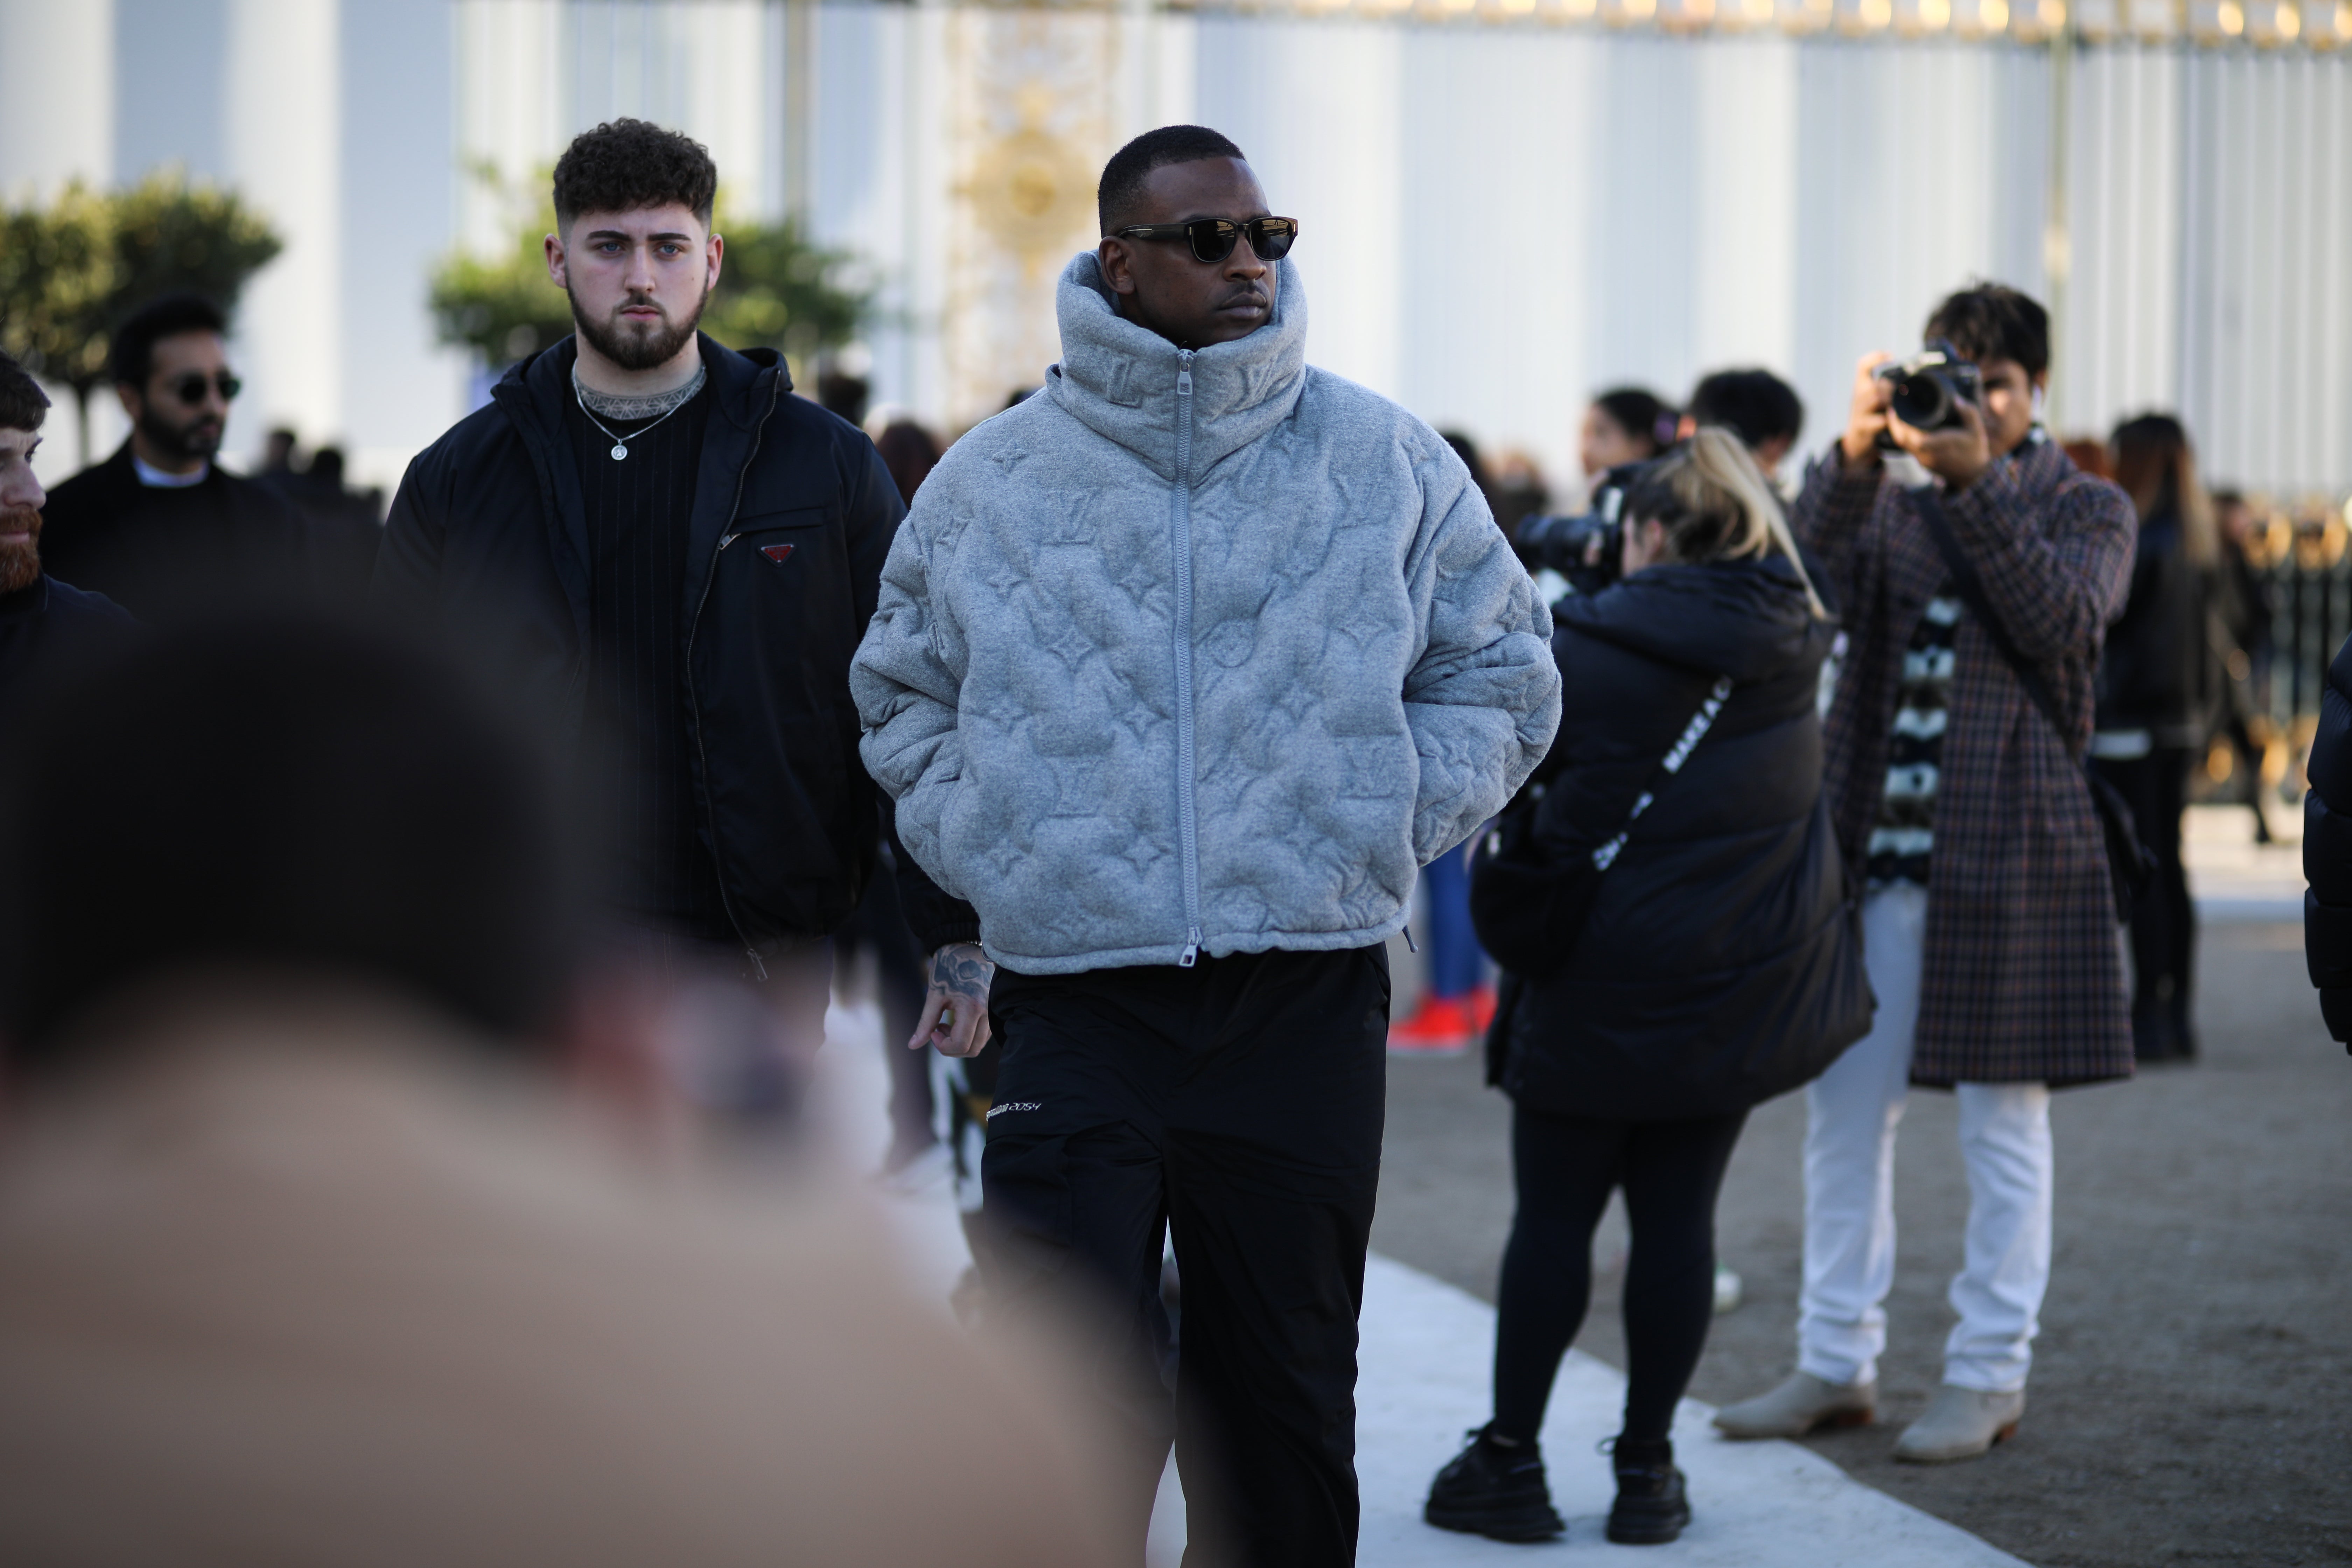 The best street style from Paris Men's Fashion Week 2020